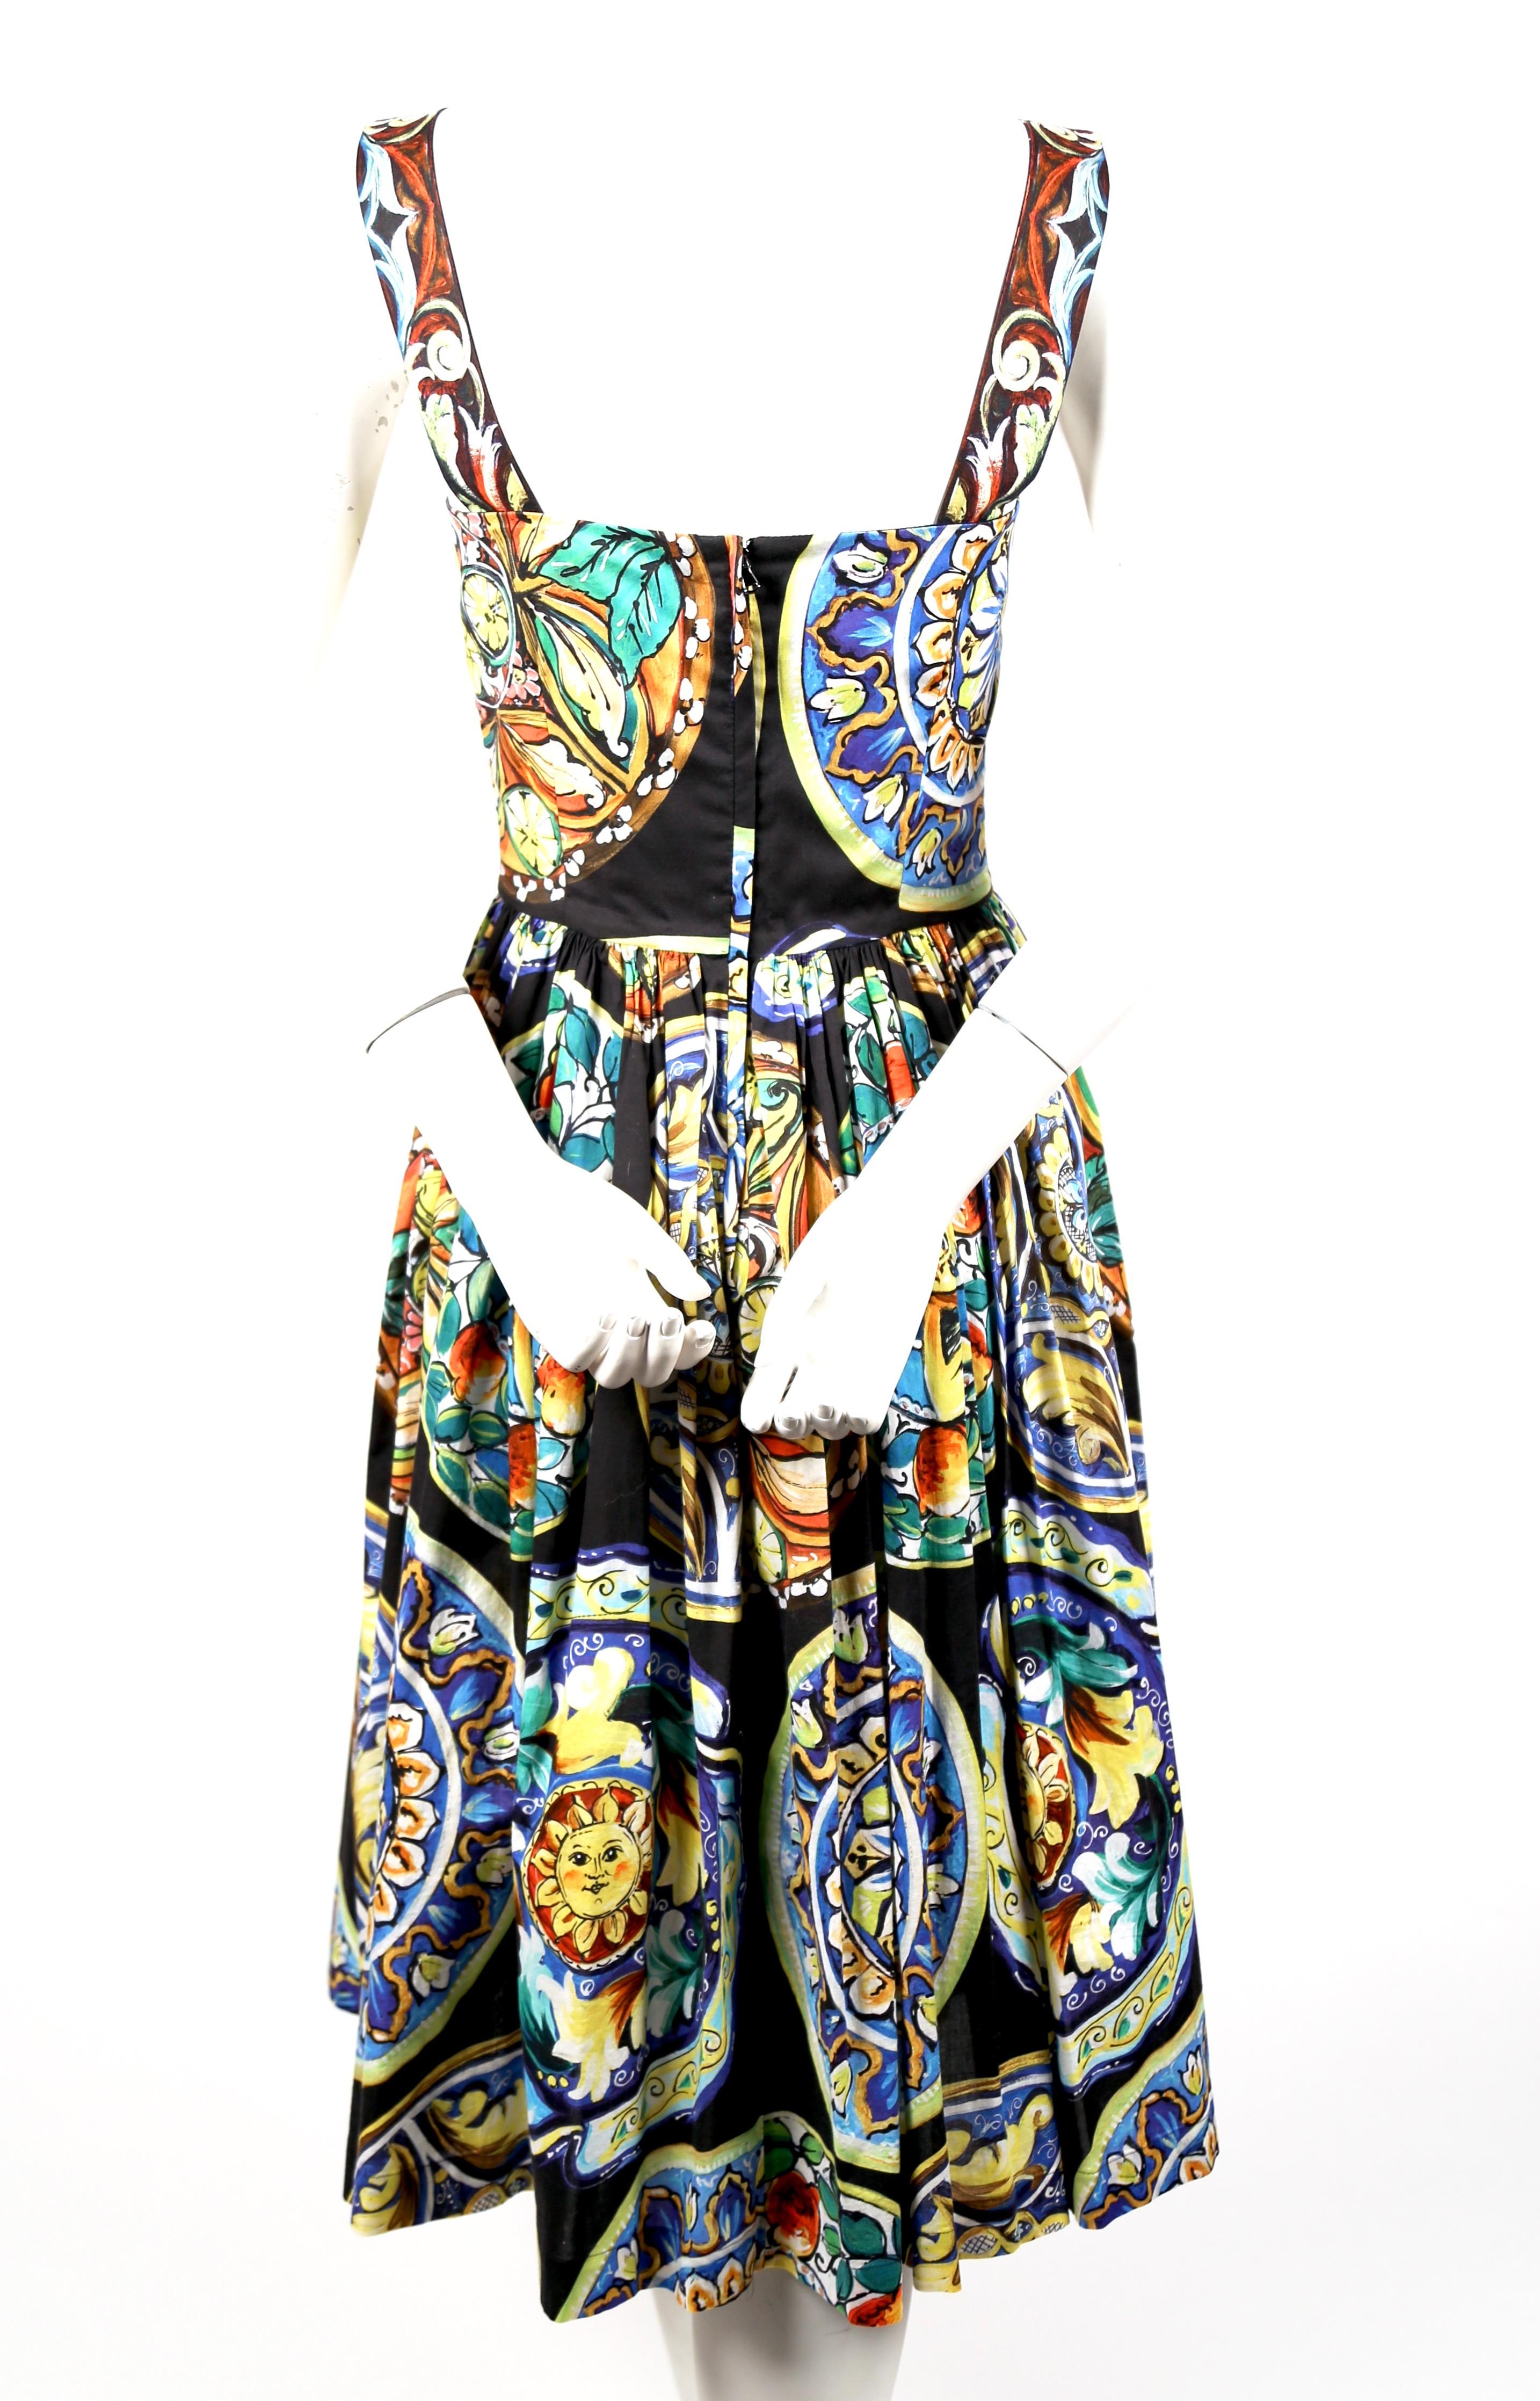 sicilian print dress